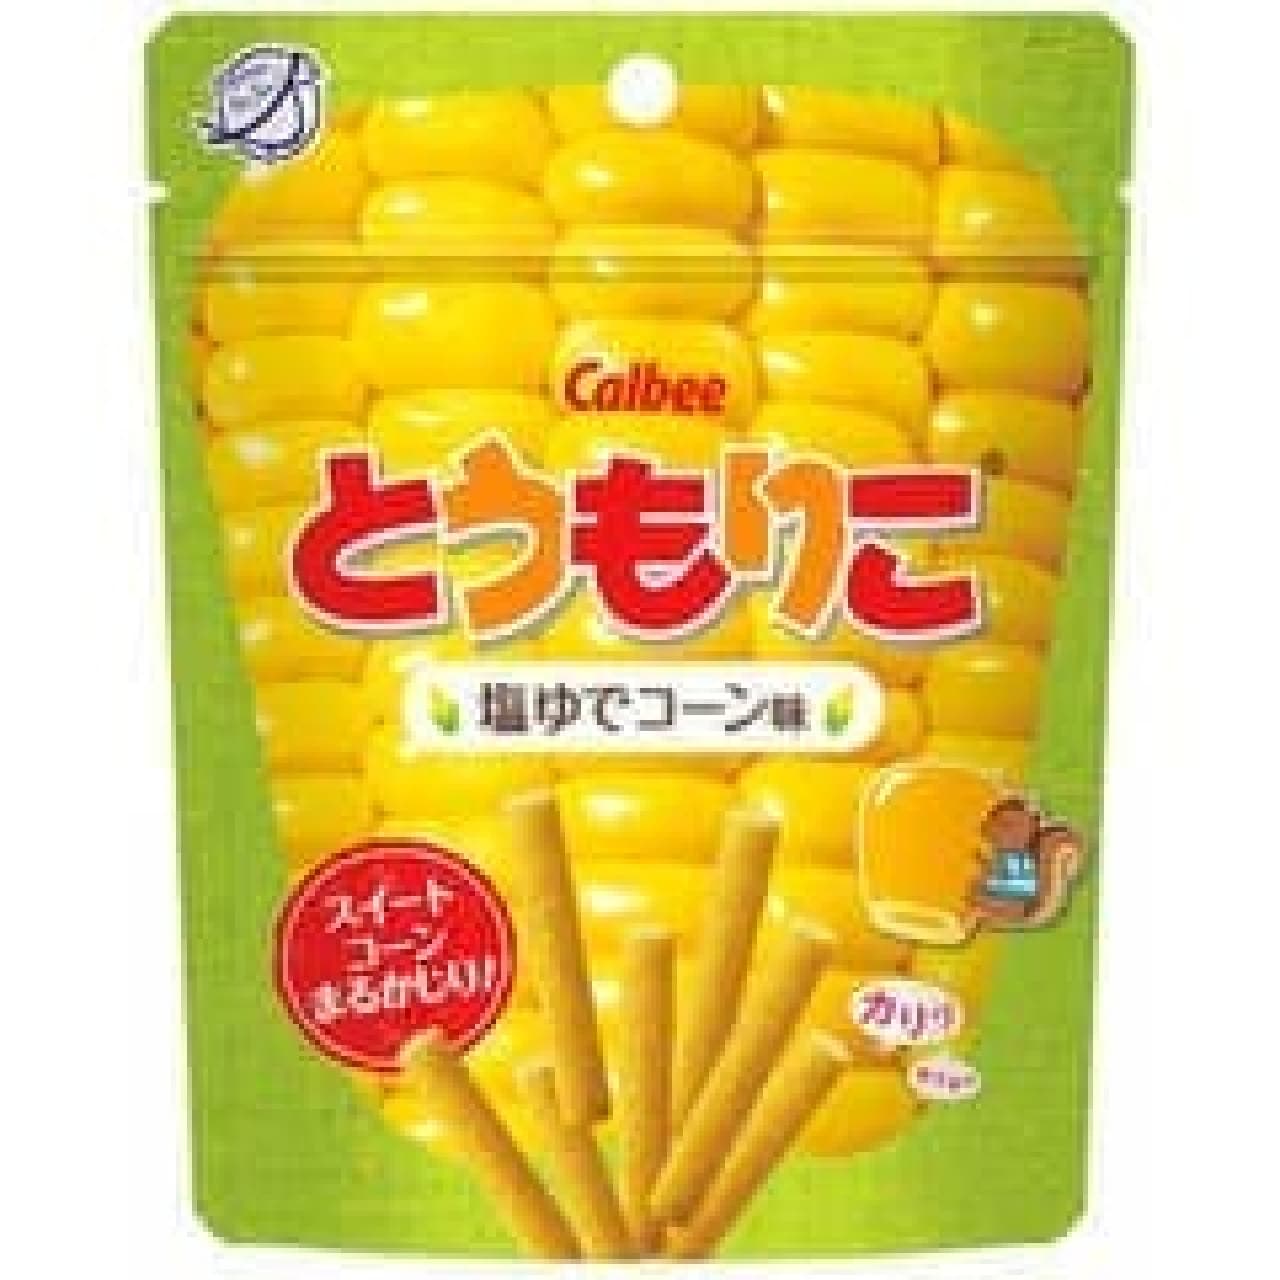 Calbee "Tomoriko salt boiled corn flavor"